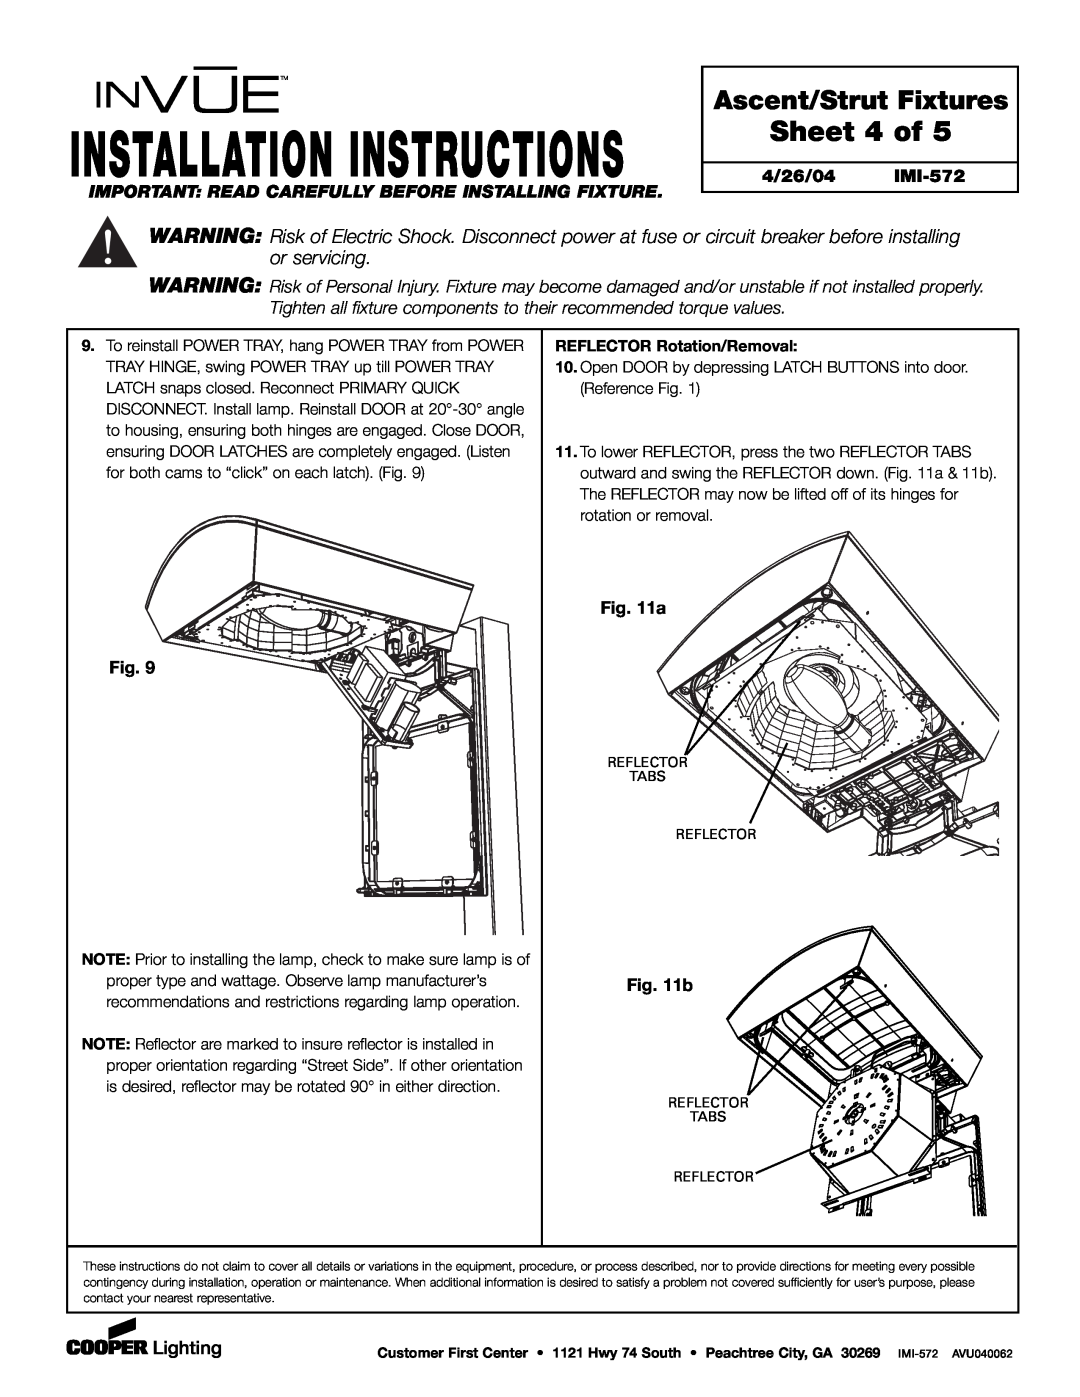 Cooper Lighting Sheet 4 of, b, Installation Instructions, Ascent/Strut Fixtures, 4/26/04 IMI-572 